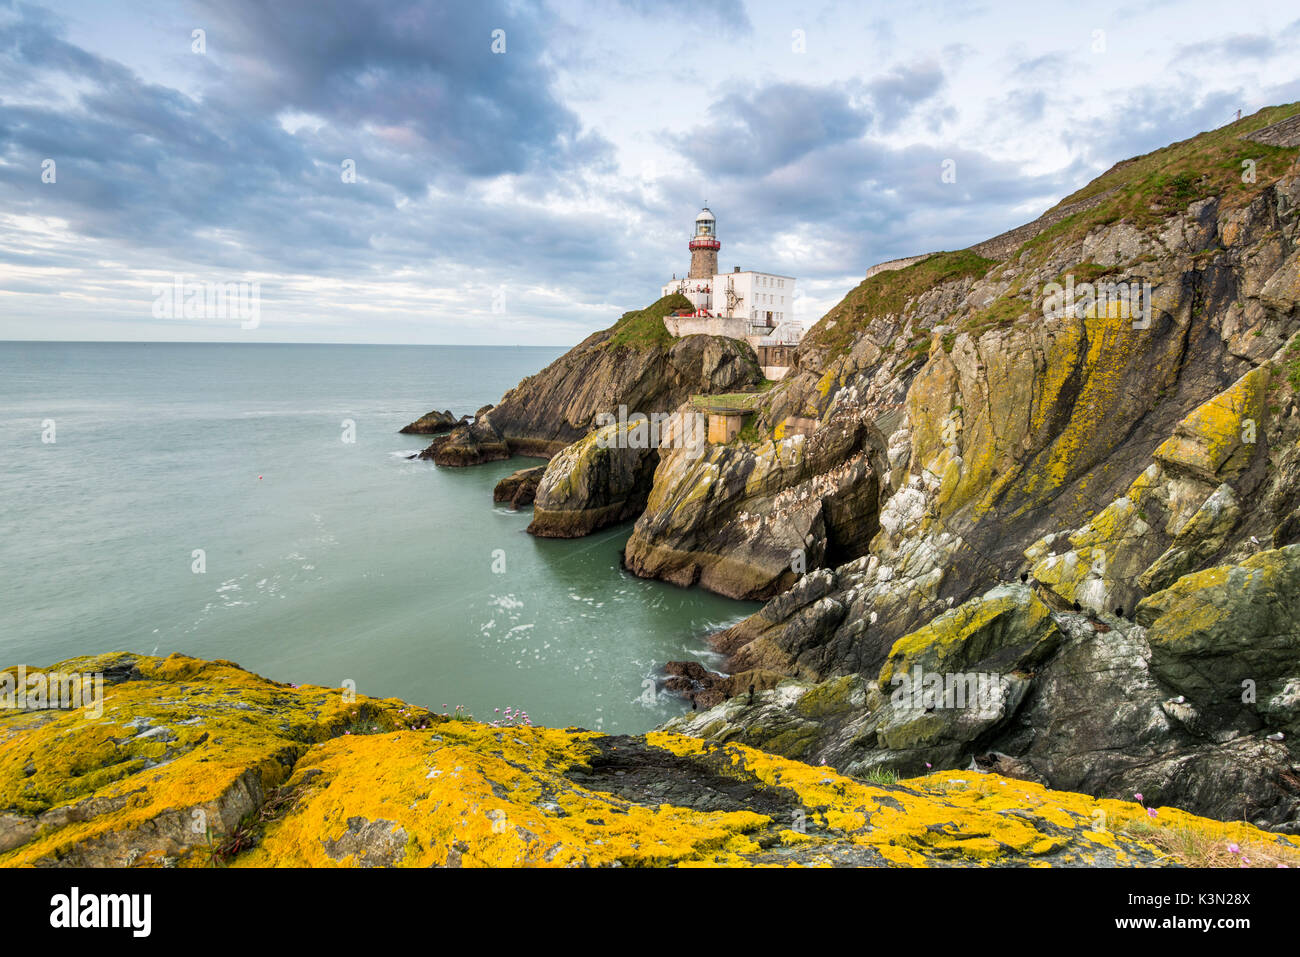 Baily lighthouse, Howth, County Dublin, Ireland, Europe. Stock Photo